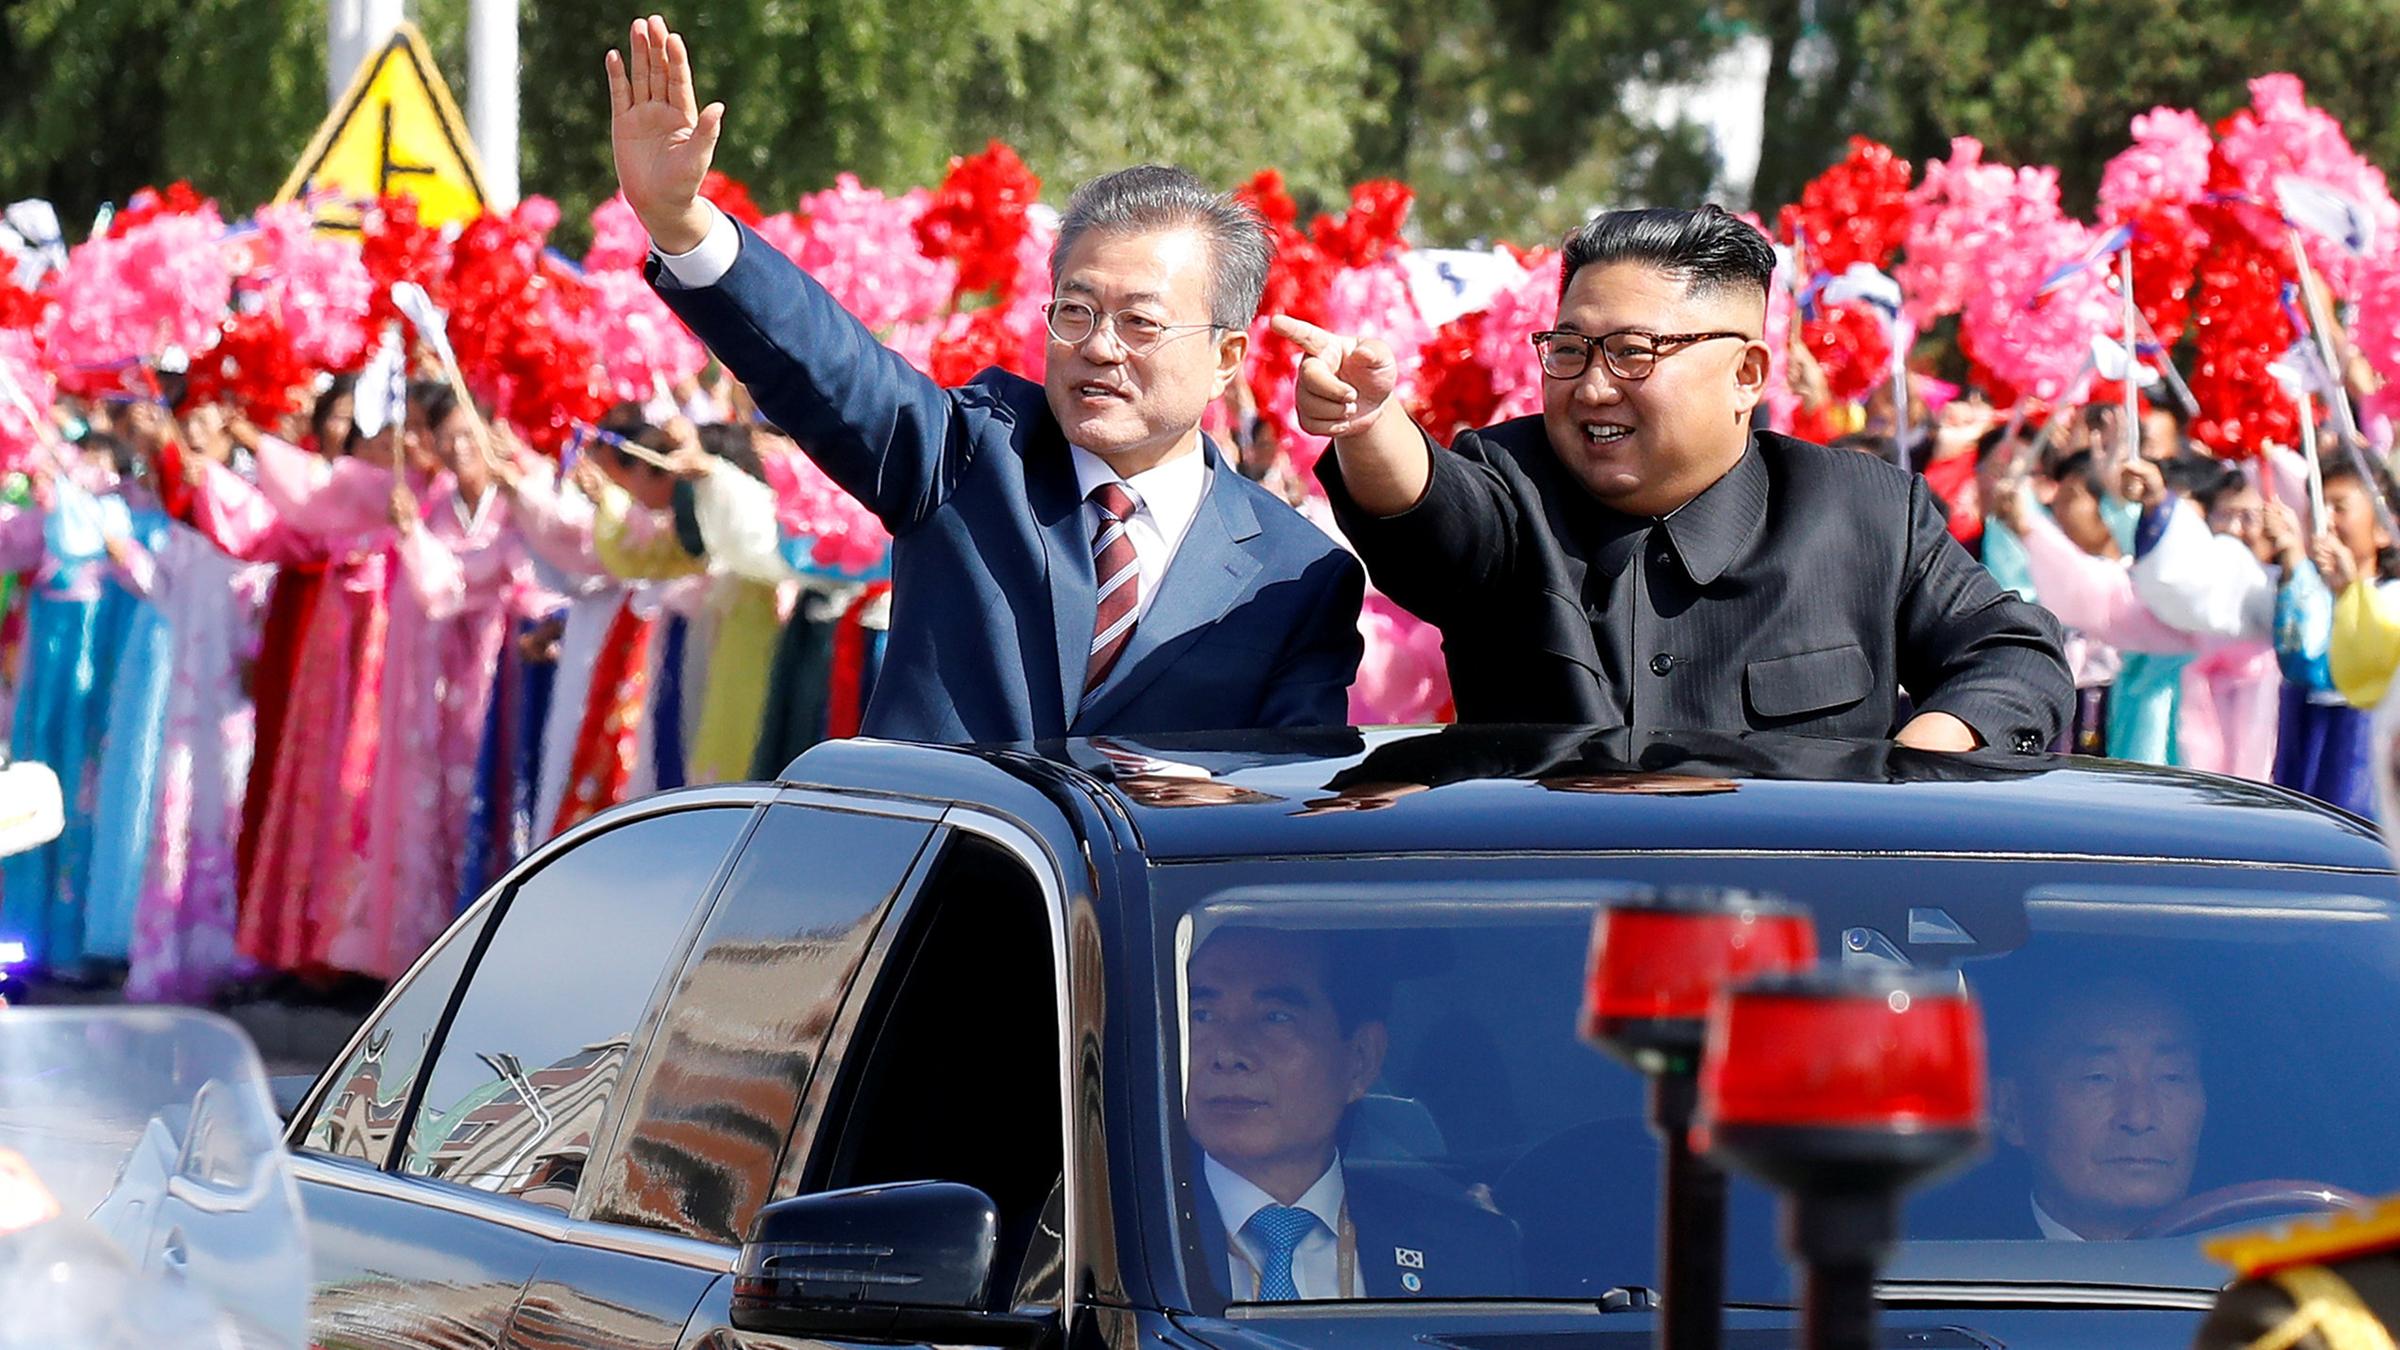 south korean president moon jae-in and north korean leader kim jong un wave during a car parade in pyongyang, north korea, september 18, 2018